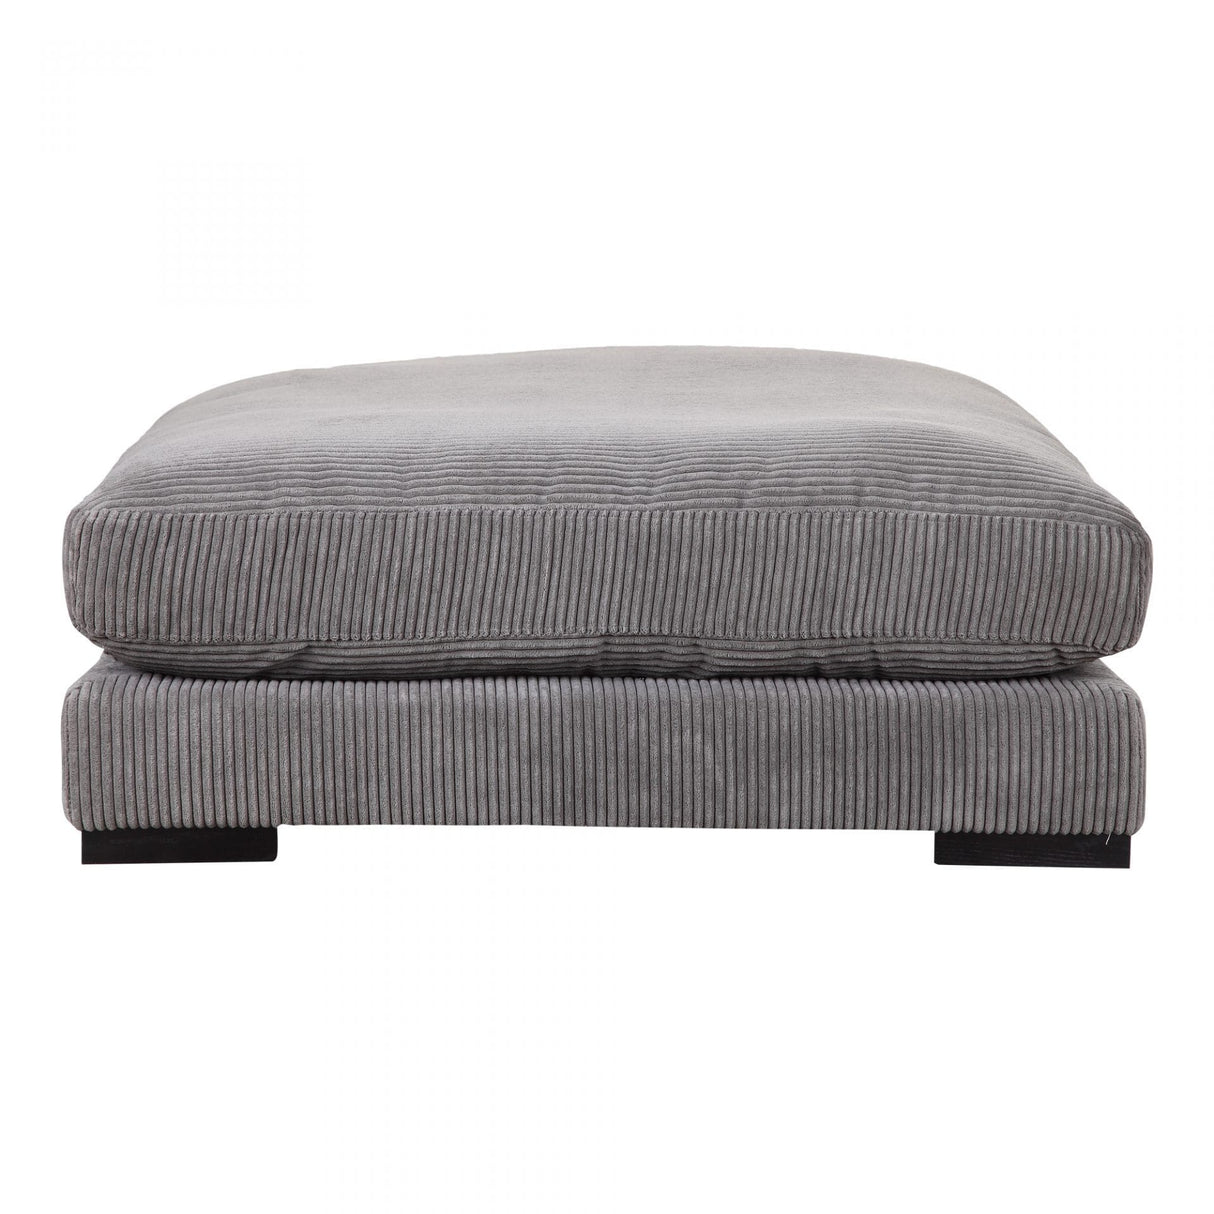 BLU Home Tumble Lounge Modular Sectional - Charcoal Furniture moes-UB-1012-25 840026417457